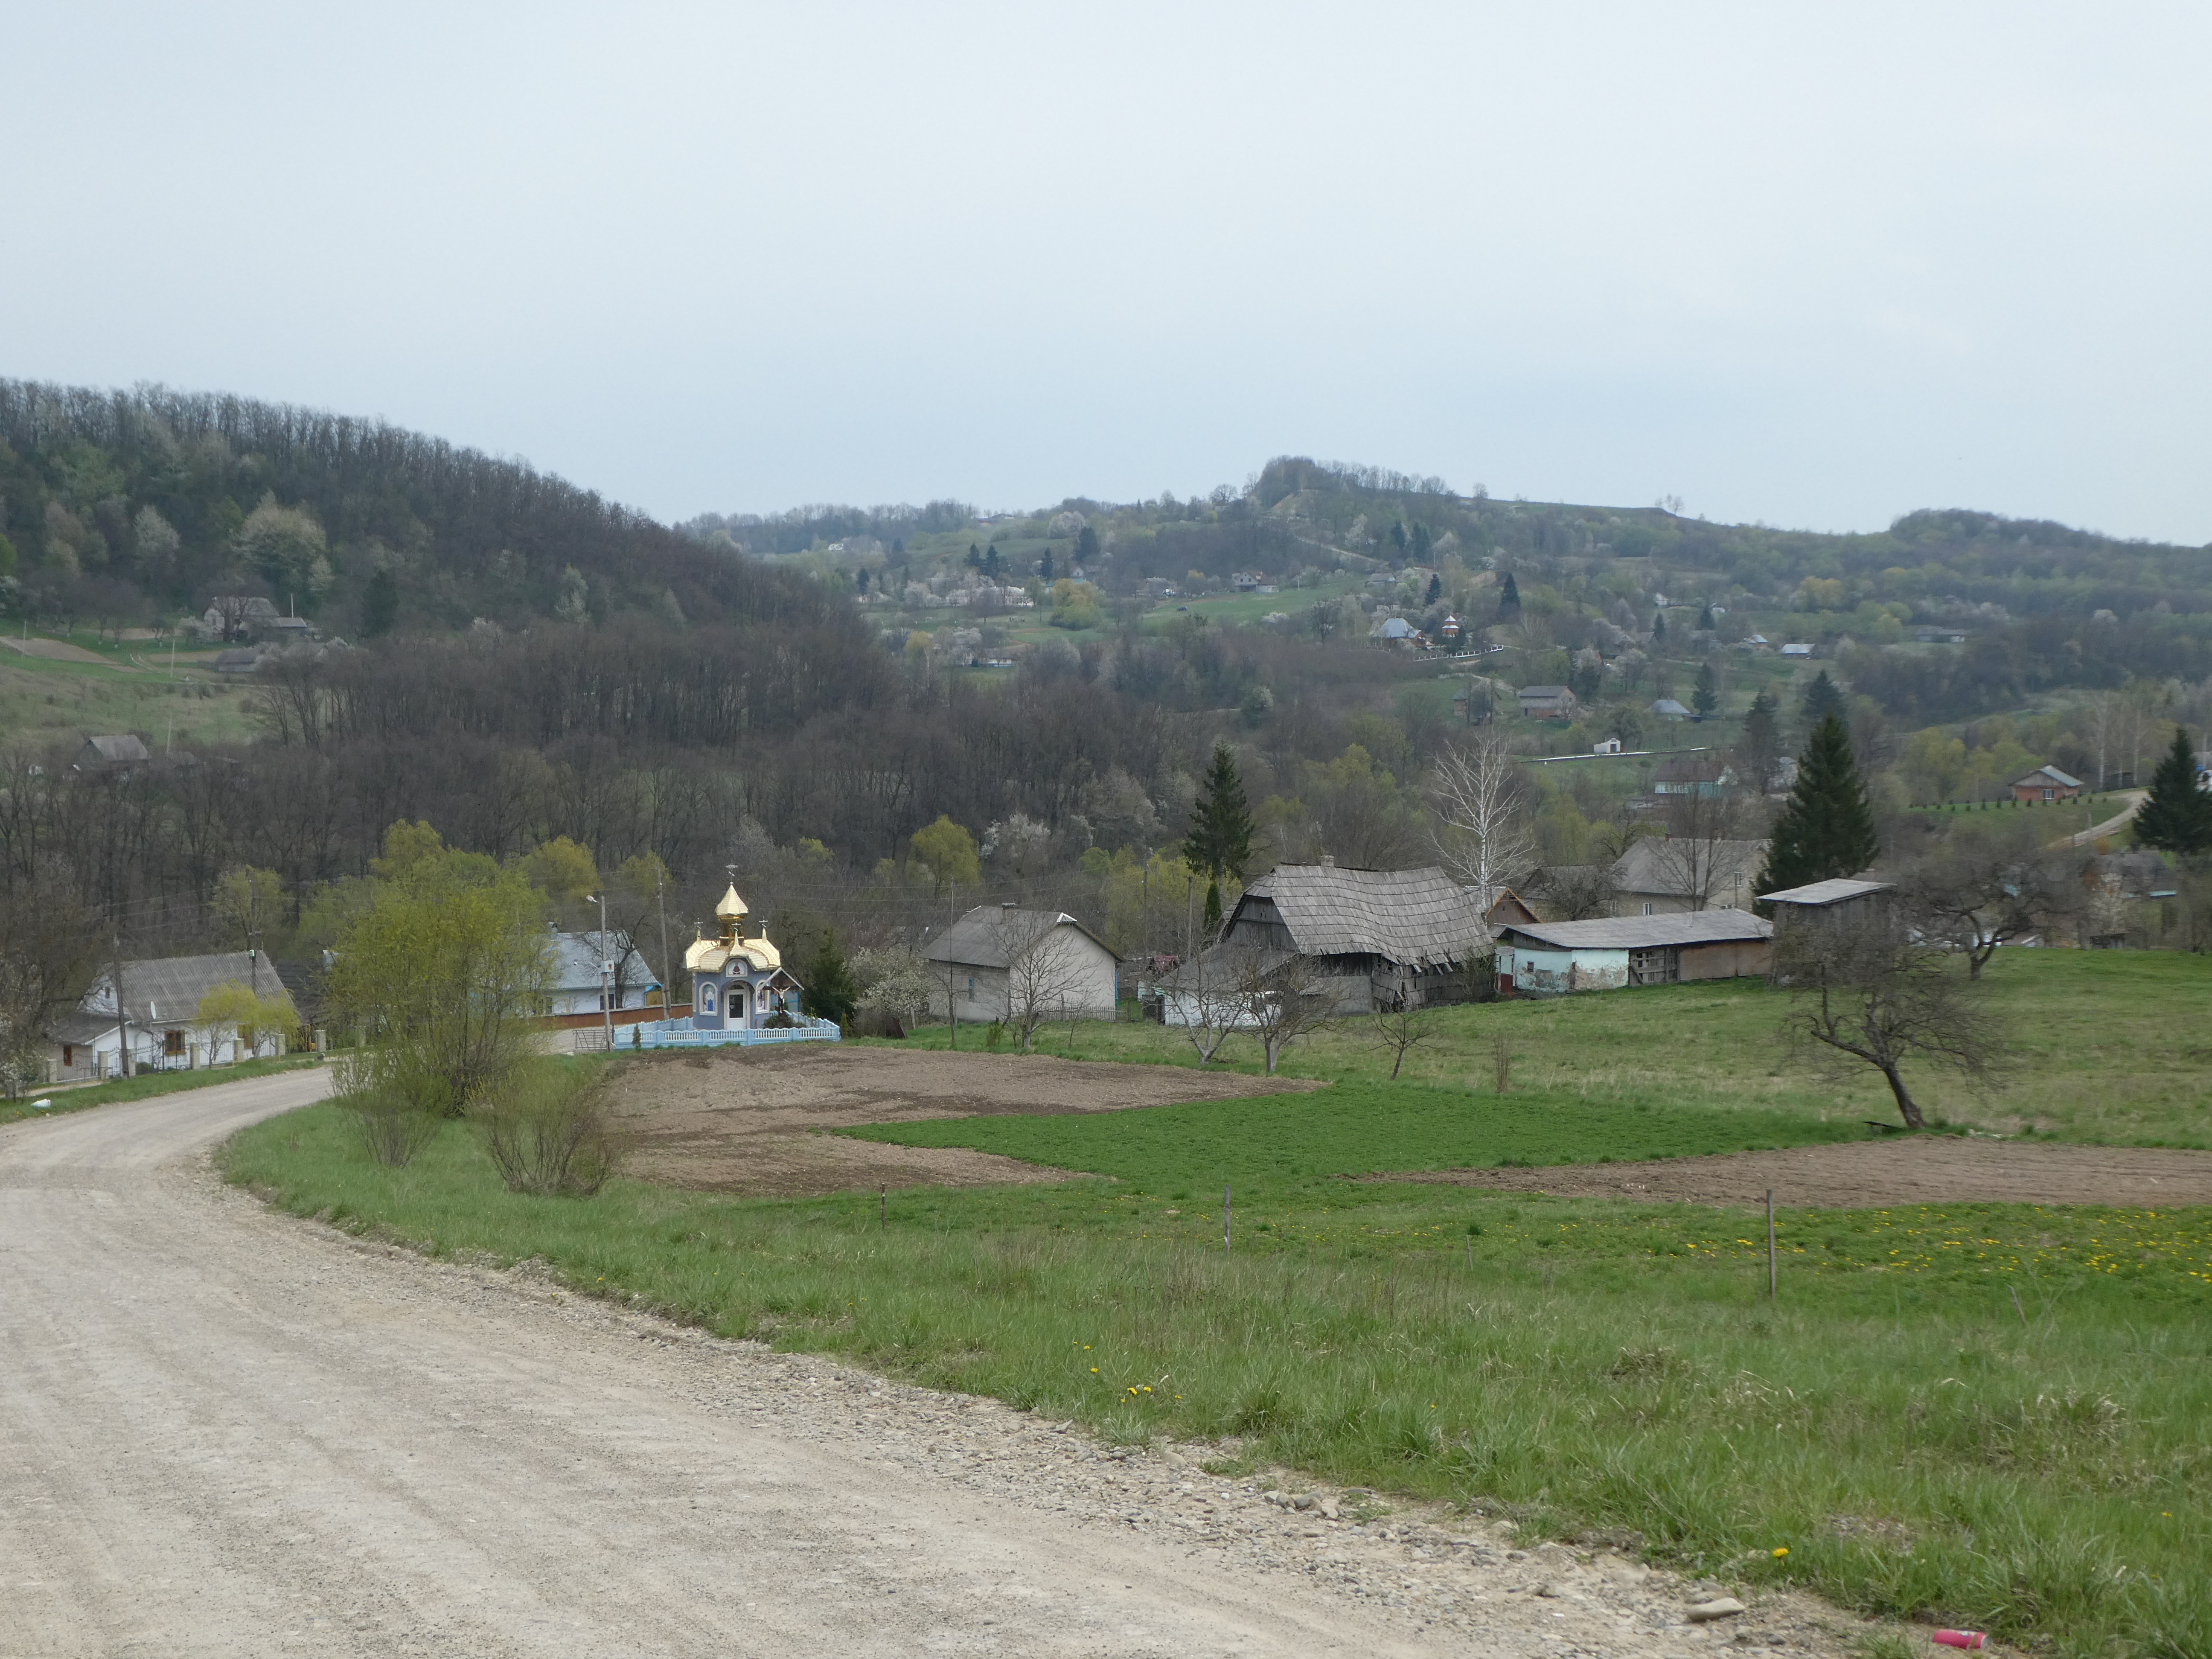 In the Ukrainian part of former Bukowina